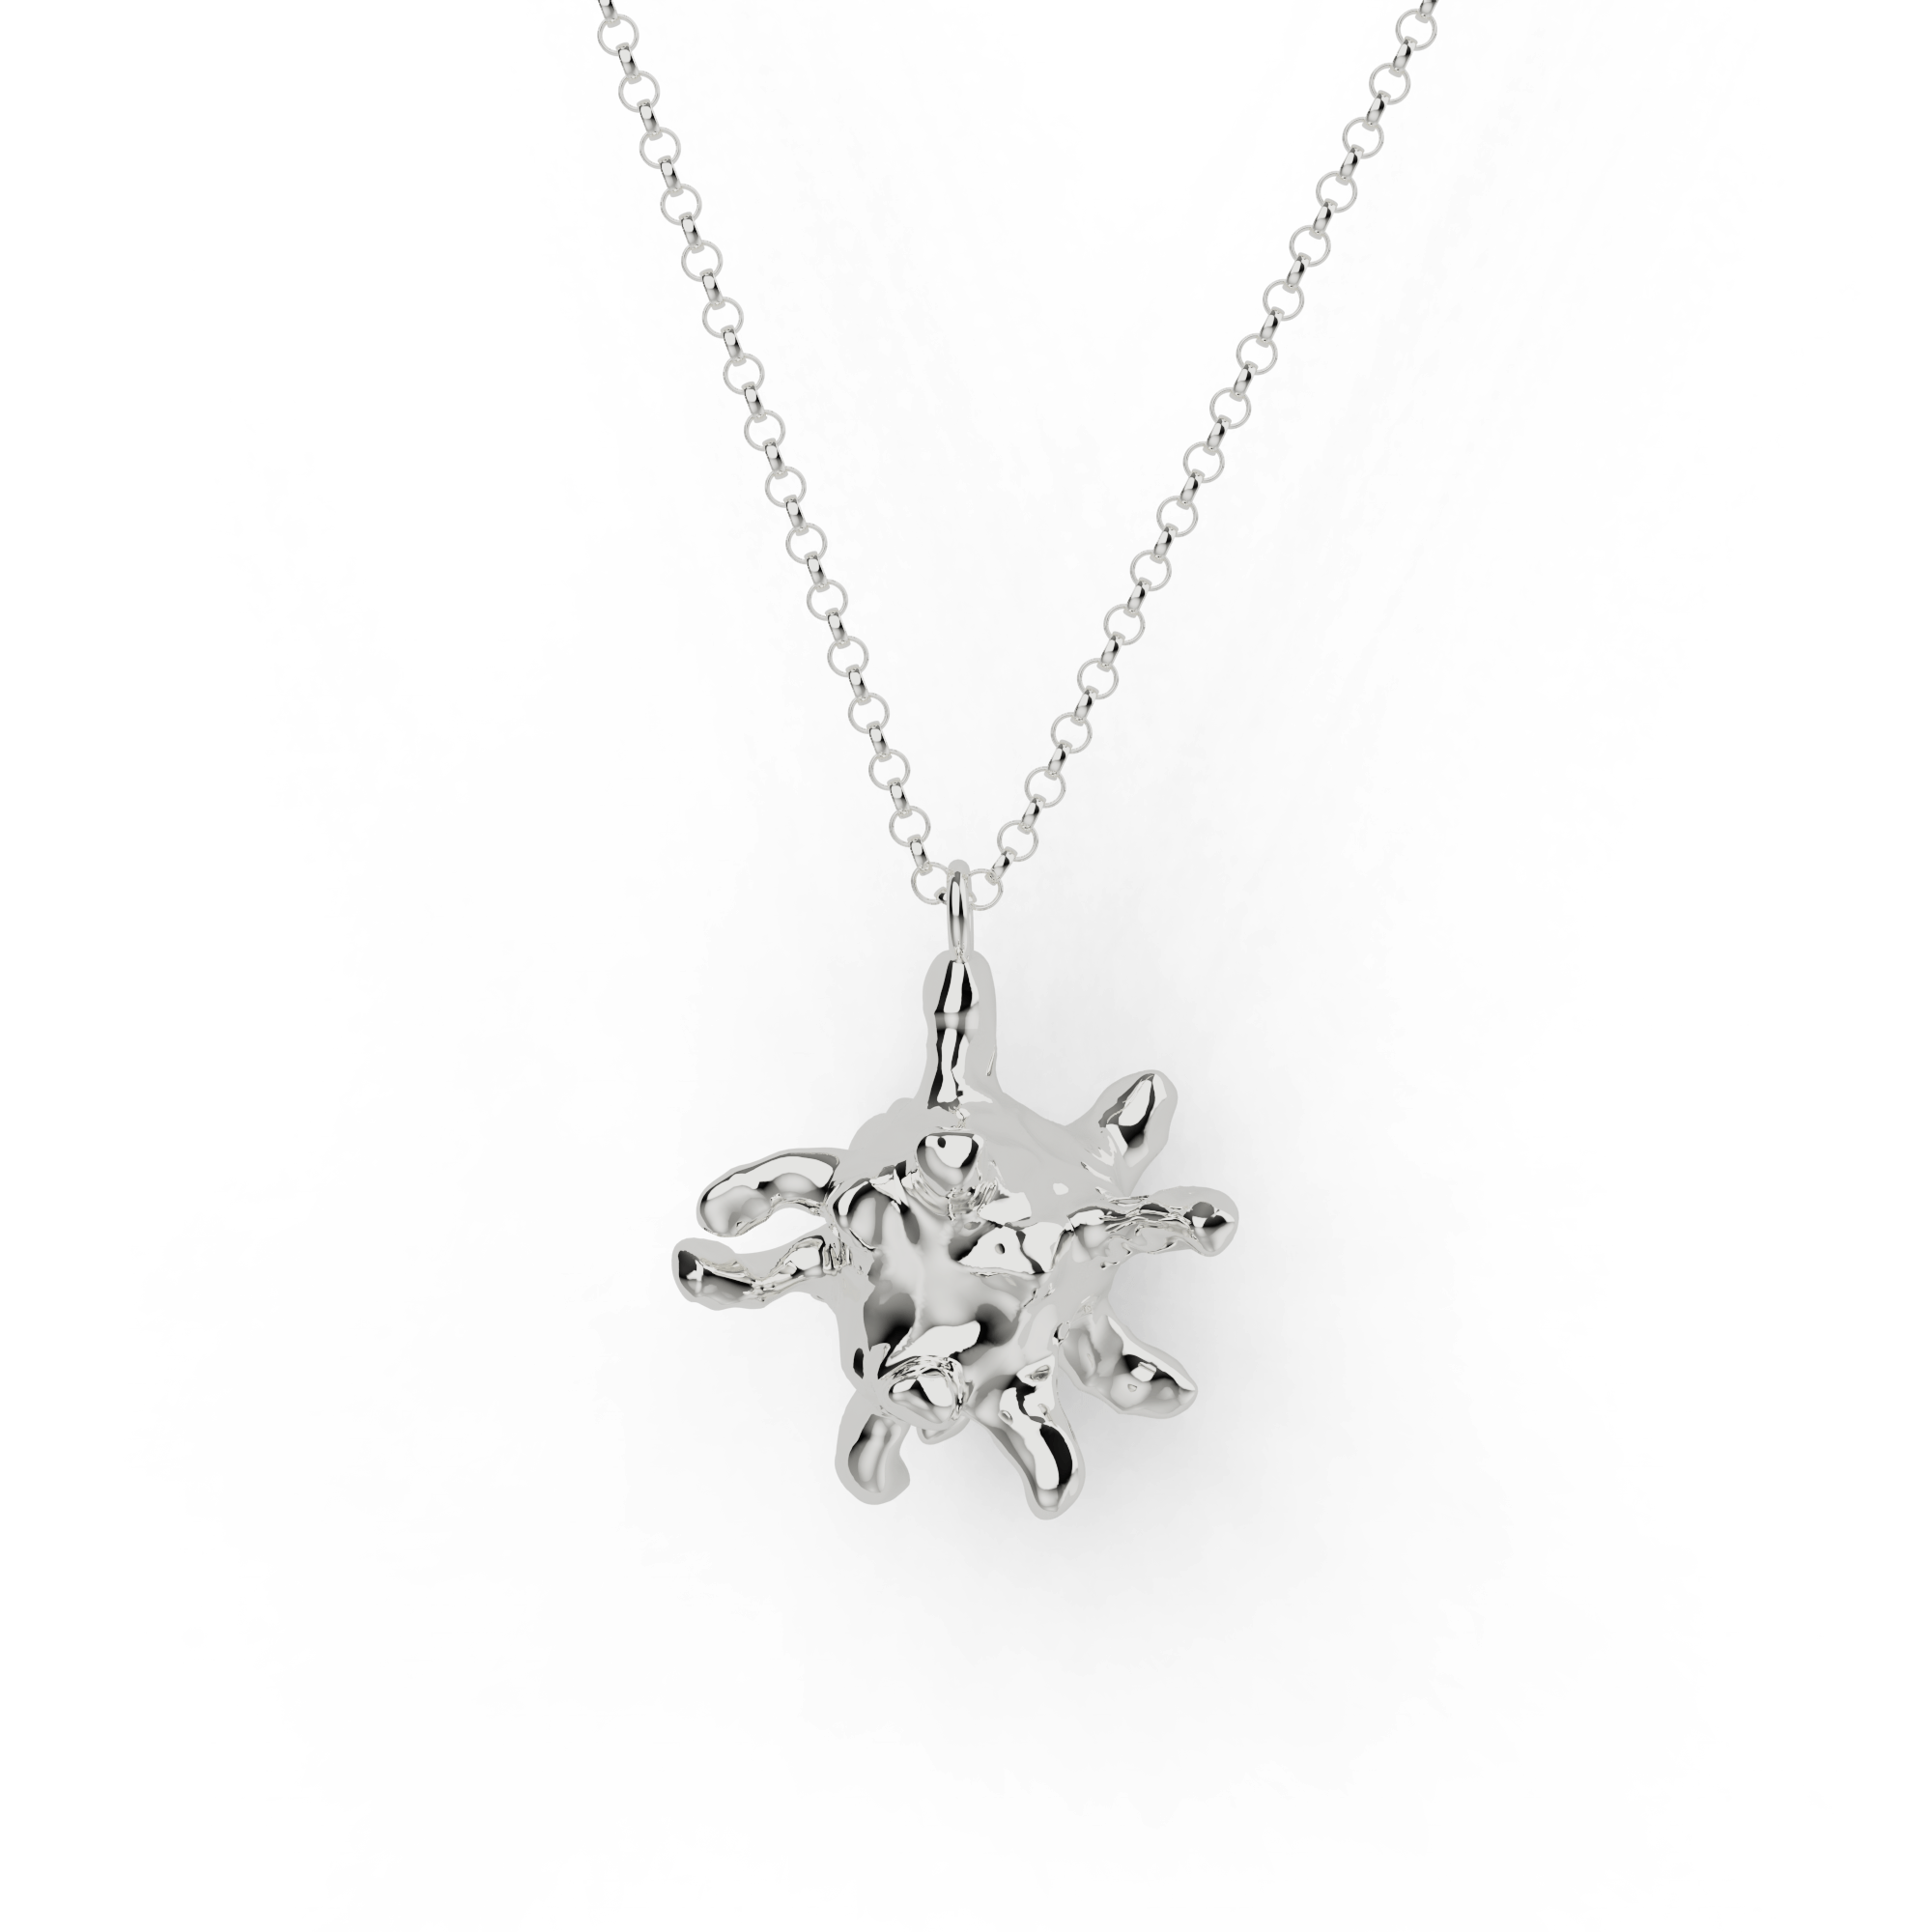 macrophage necklace | silver